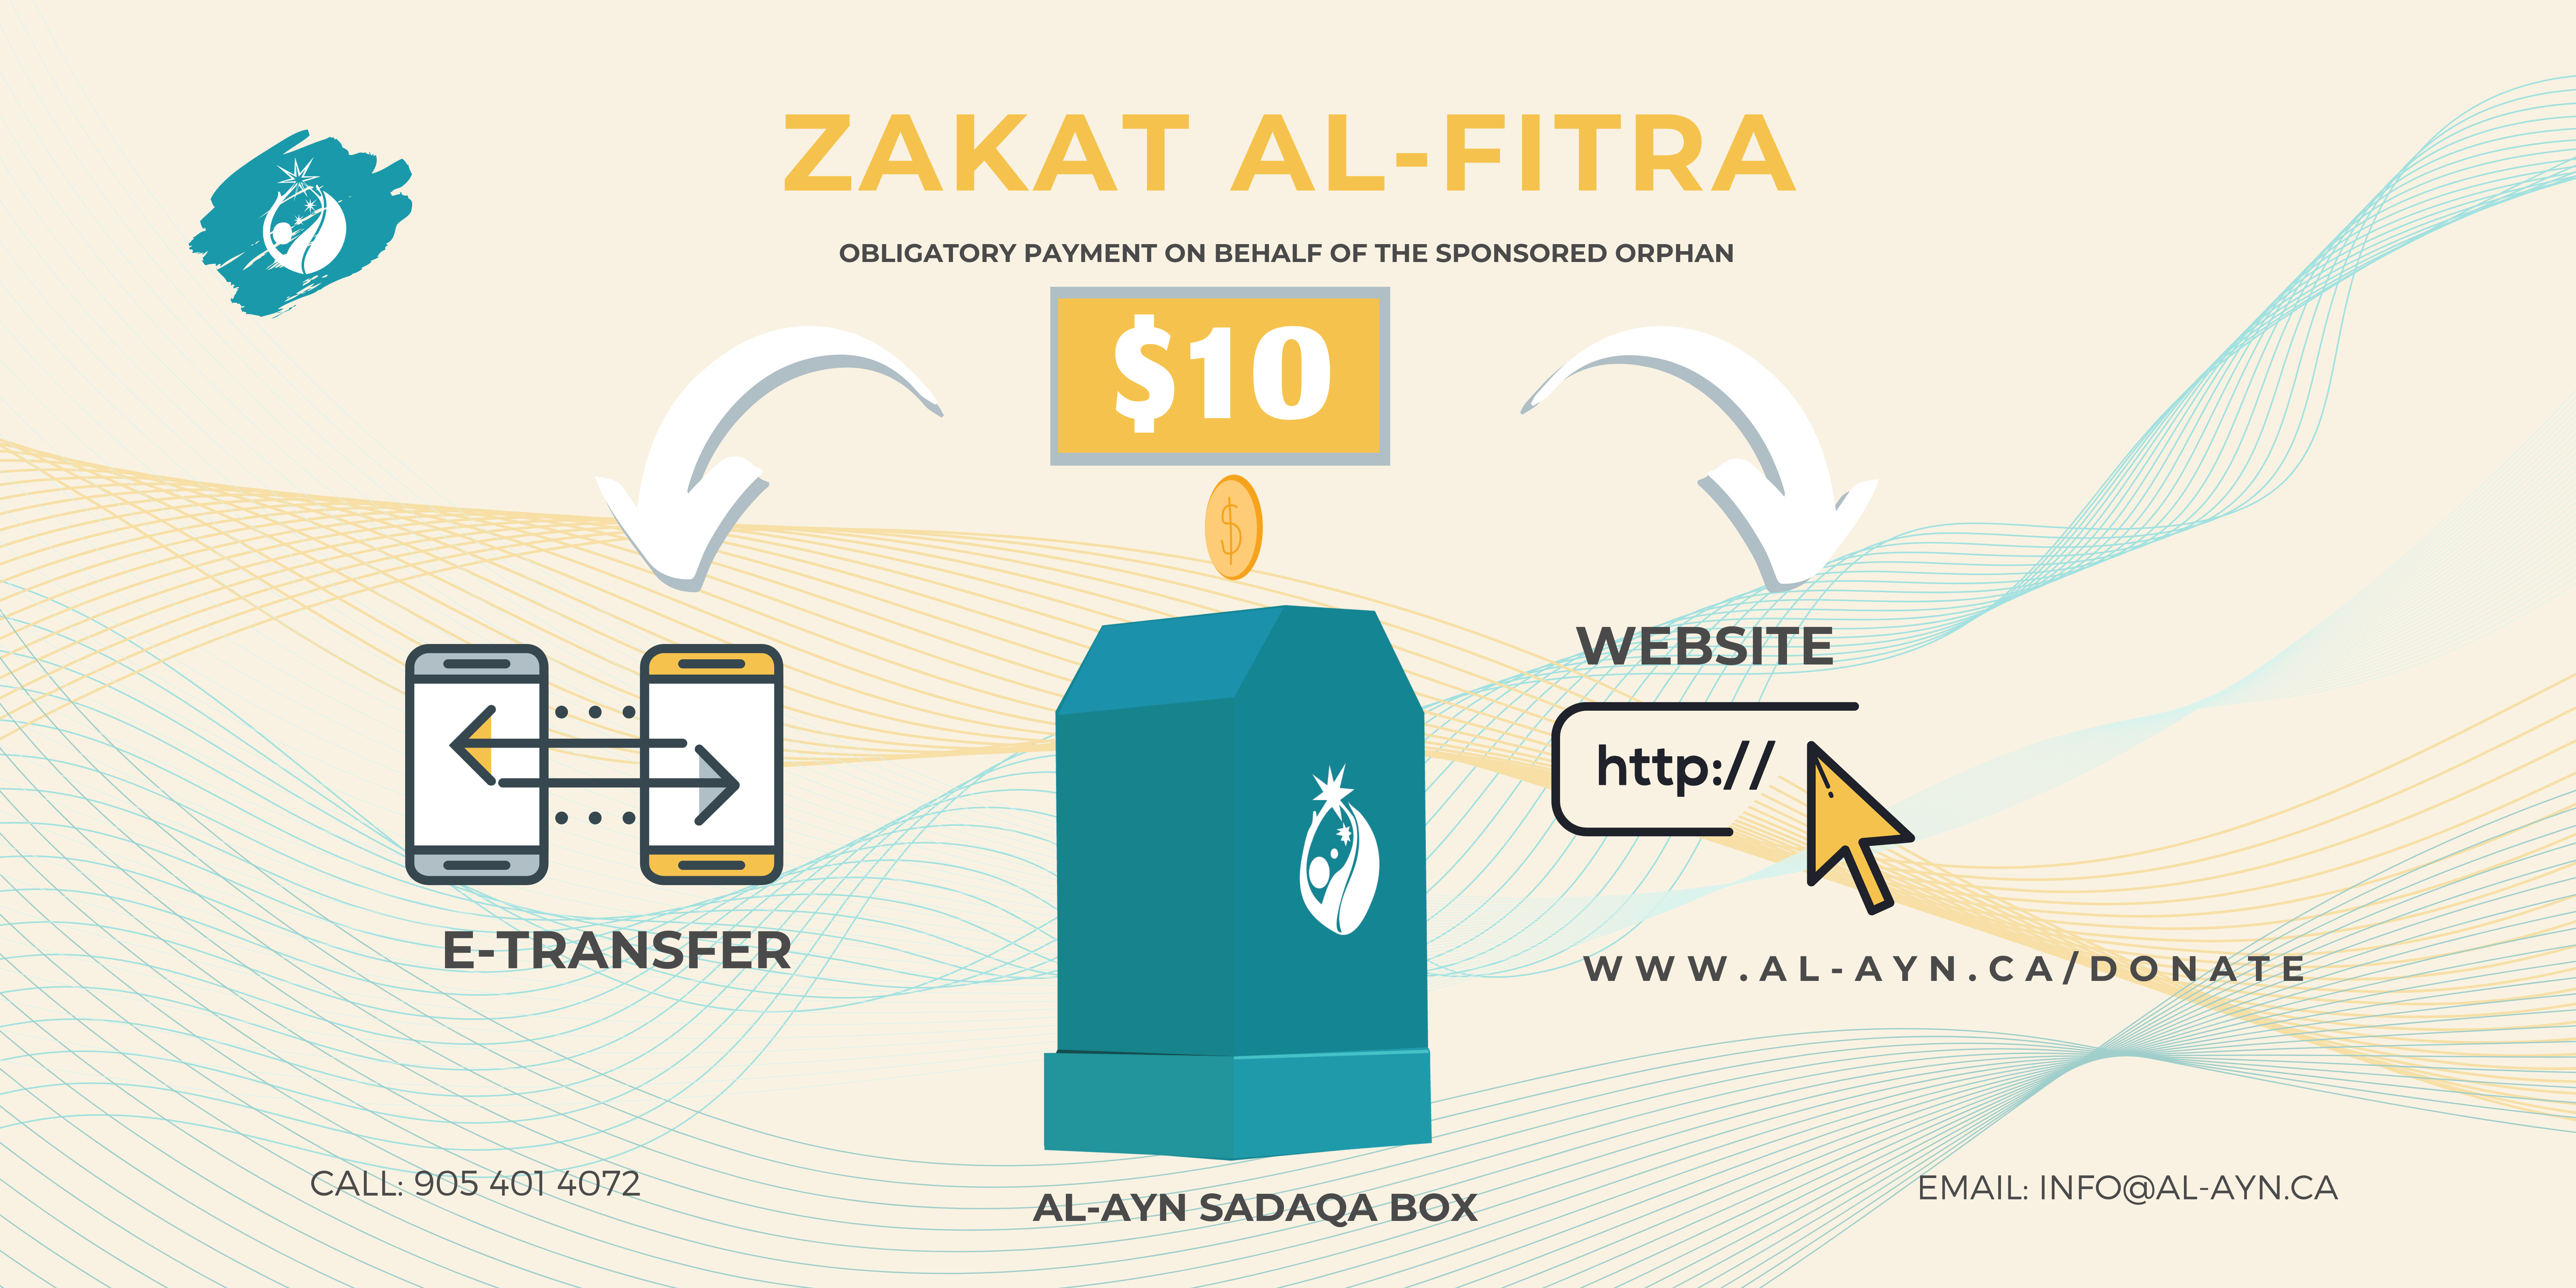 Zakat al-Fitra